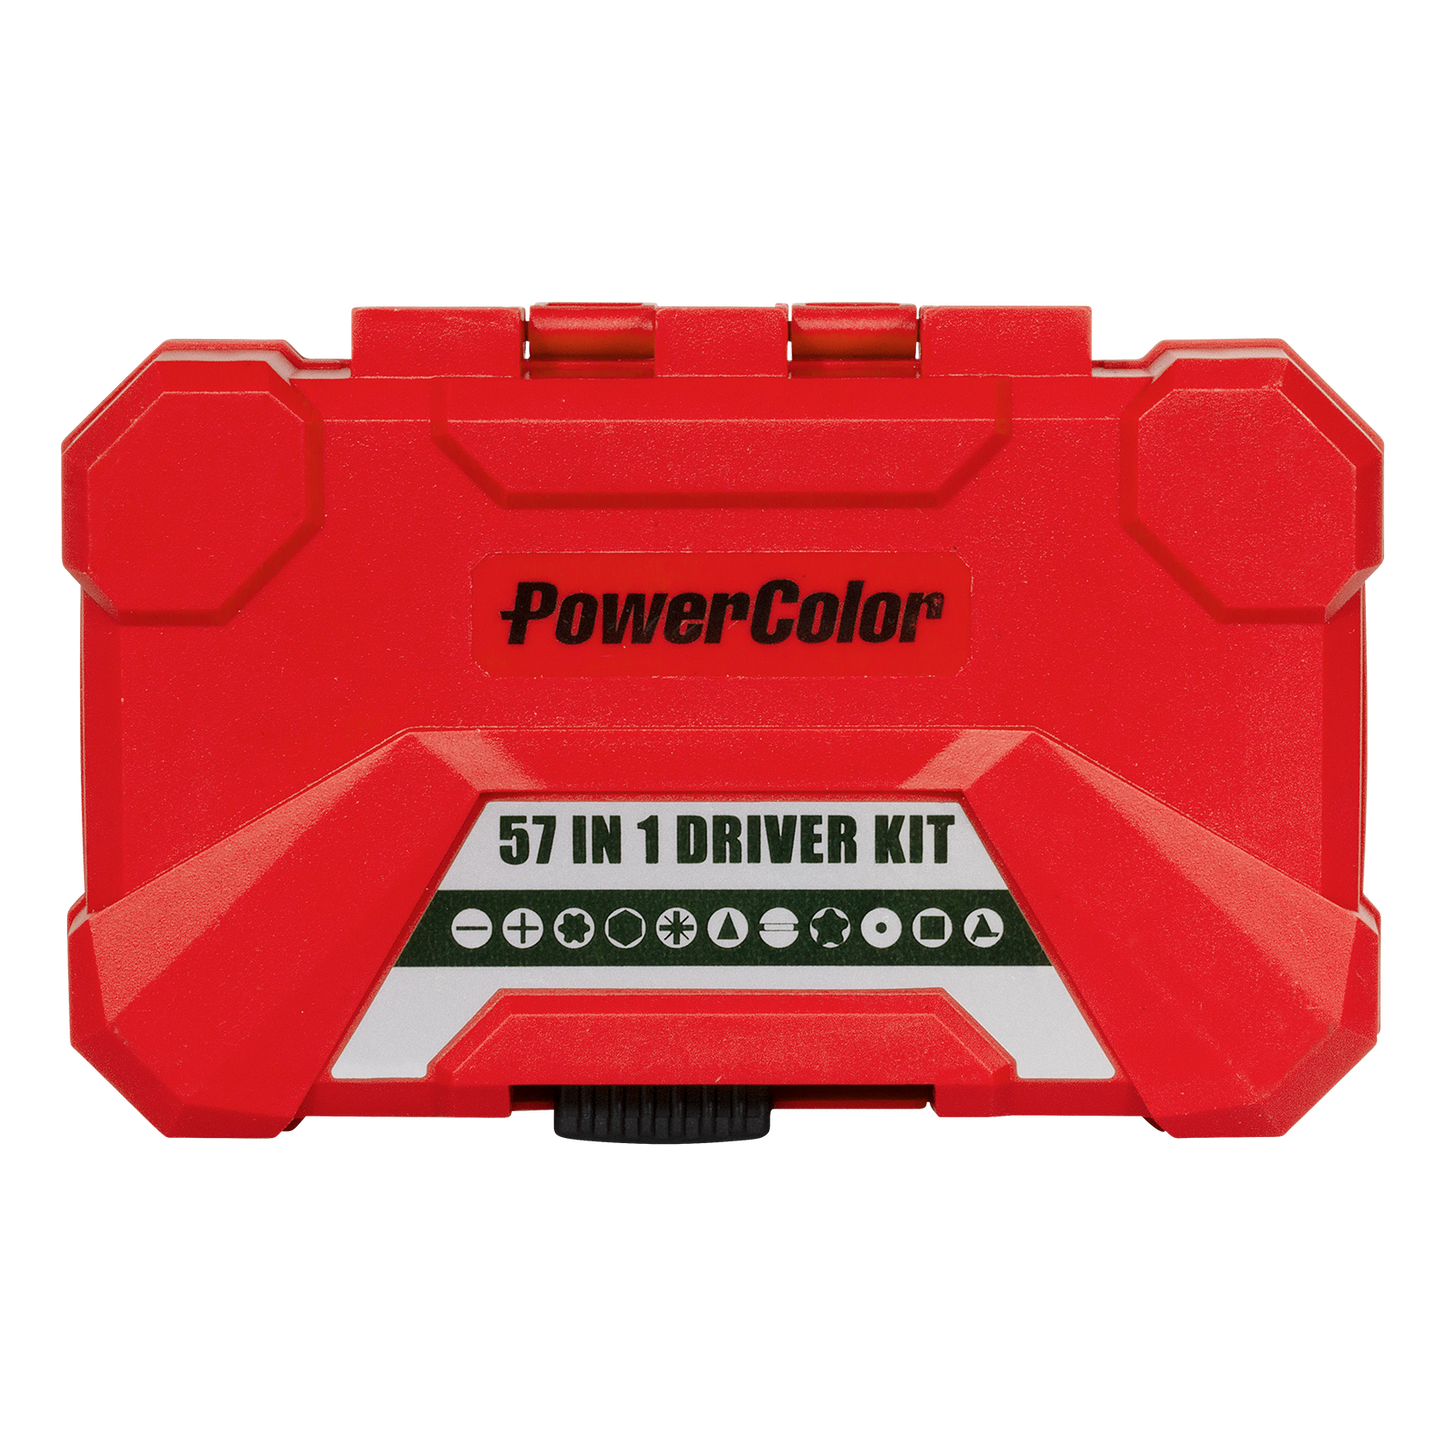 PowerColor 57-in-1 Driver Kit